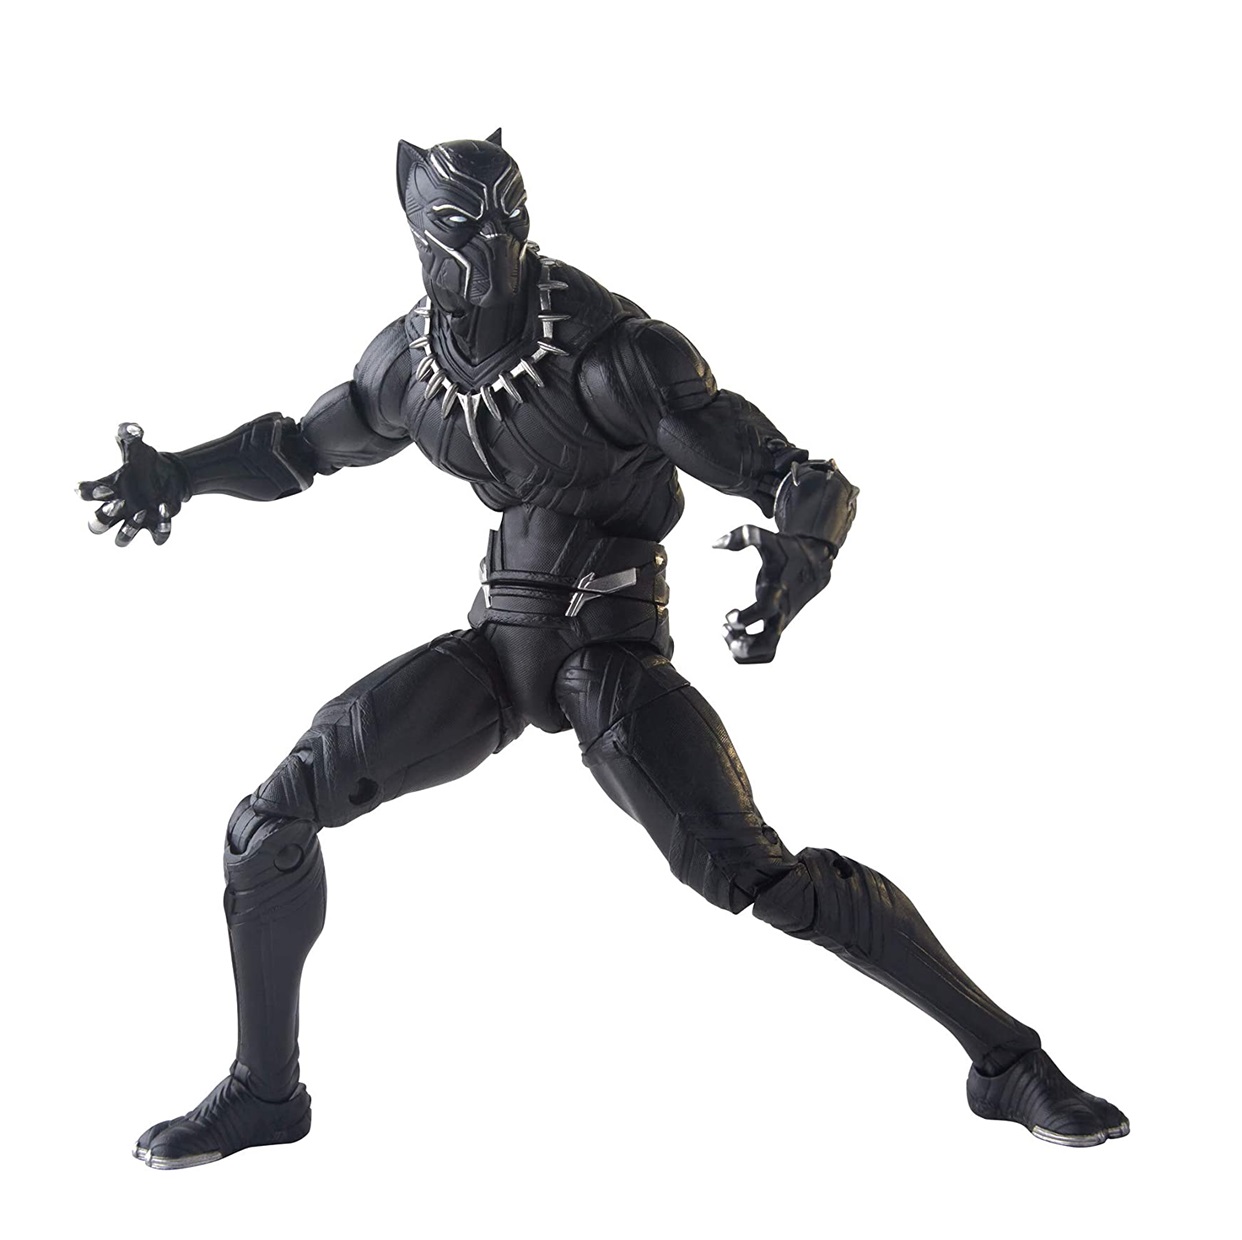 Black Panther Figura Black Panther B A F M´ Baku Legends